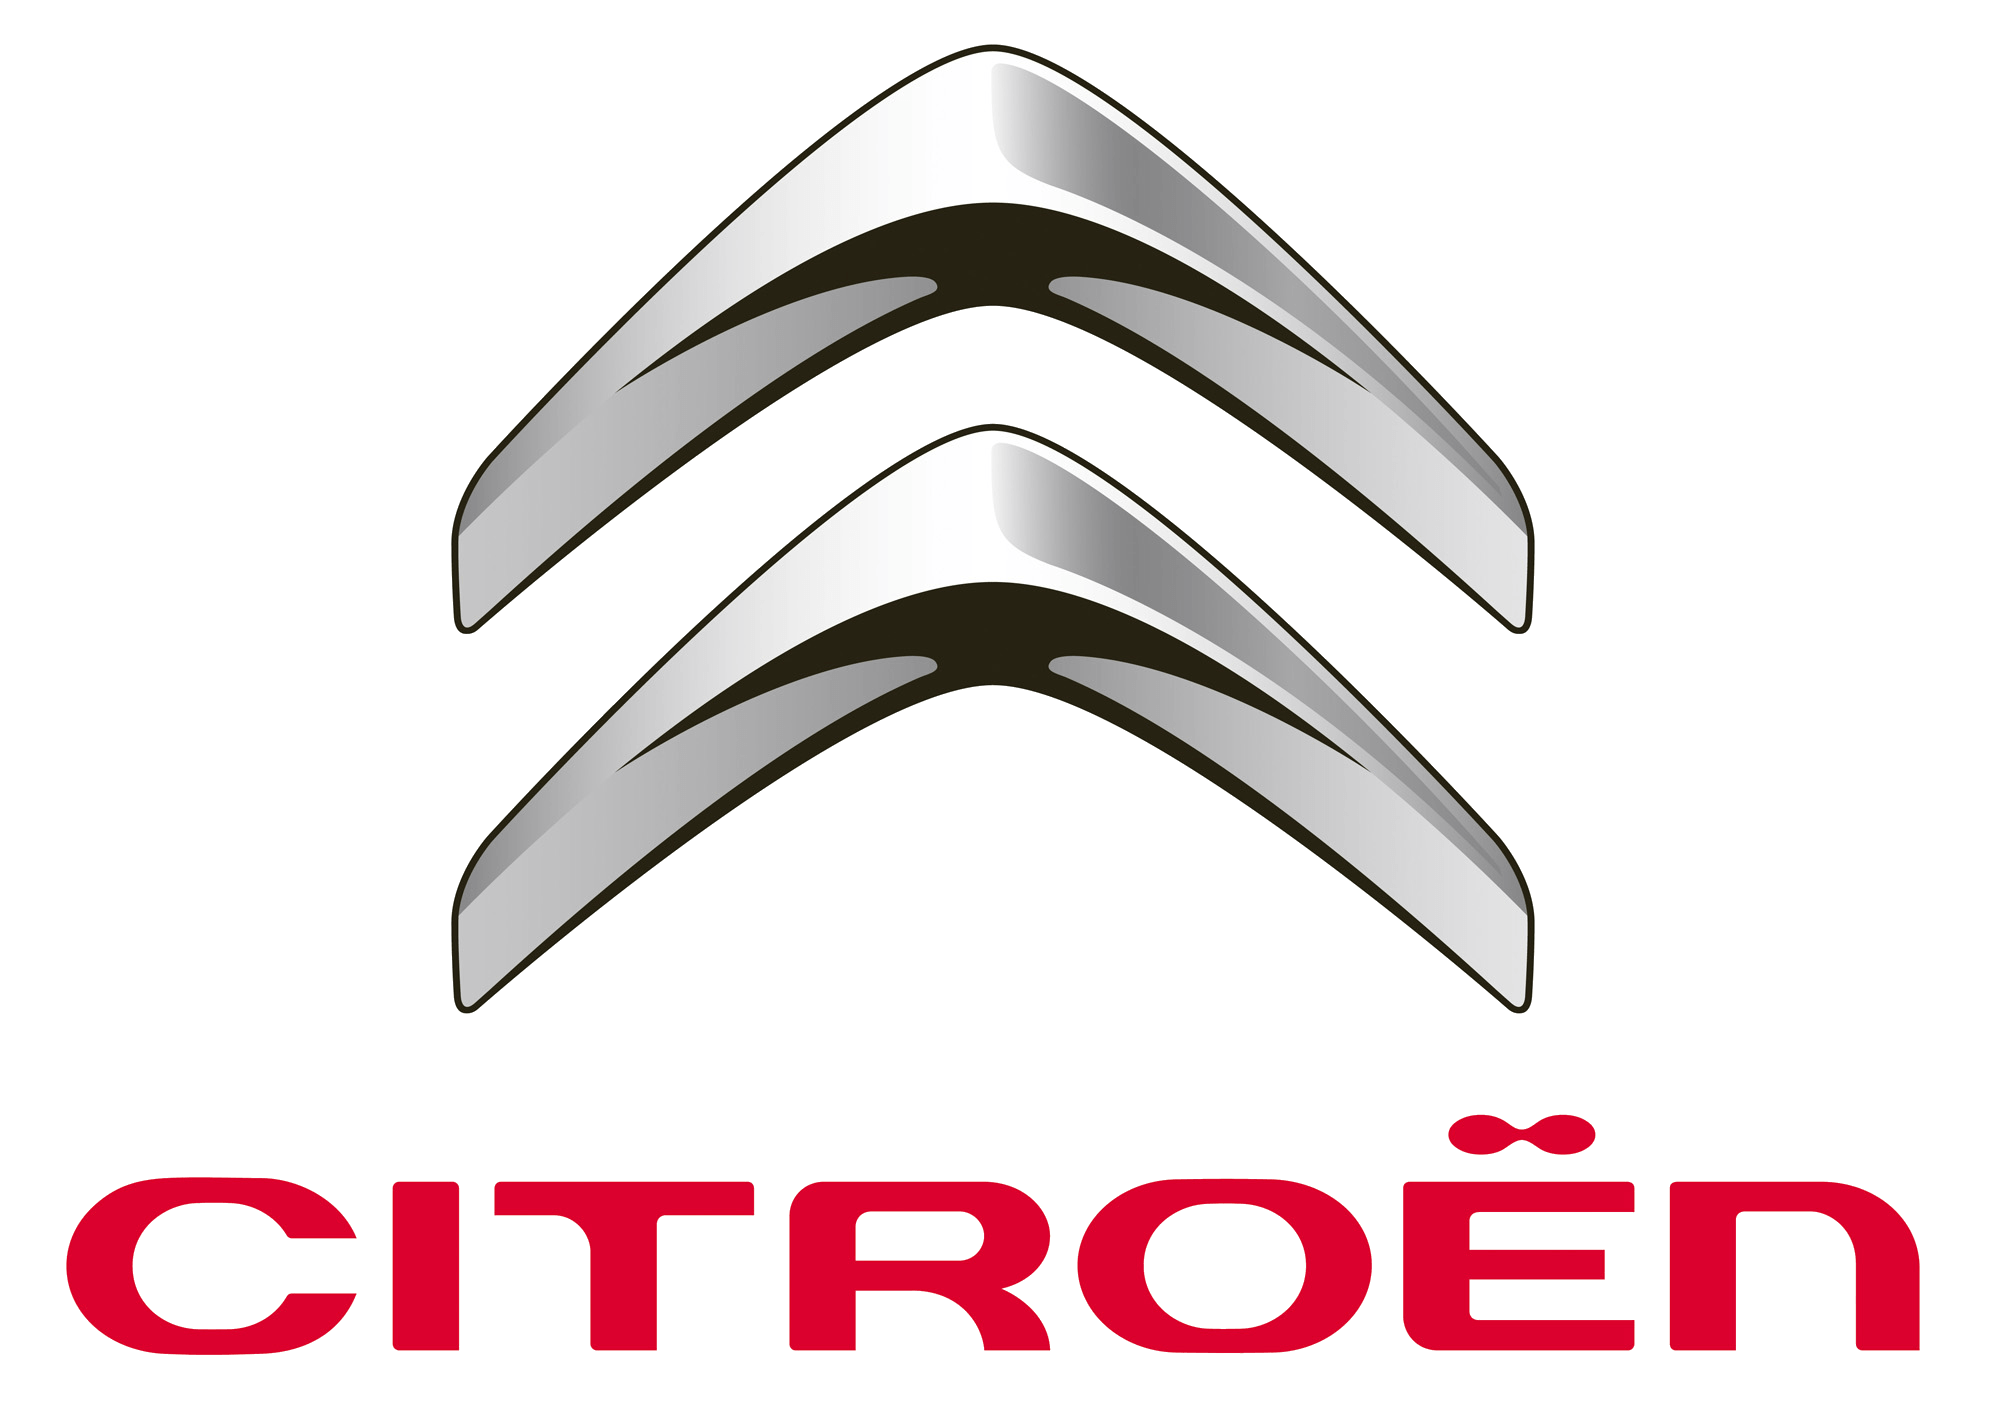 Silver Chevron Logo - Citroen Logo, Citroen Car Symbol Meaning and History | Car Brand ...